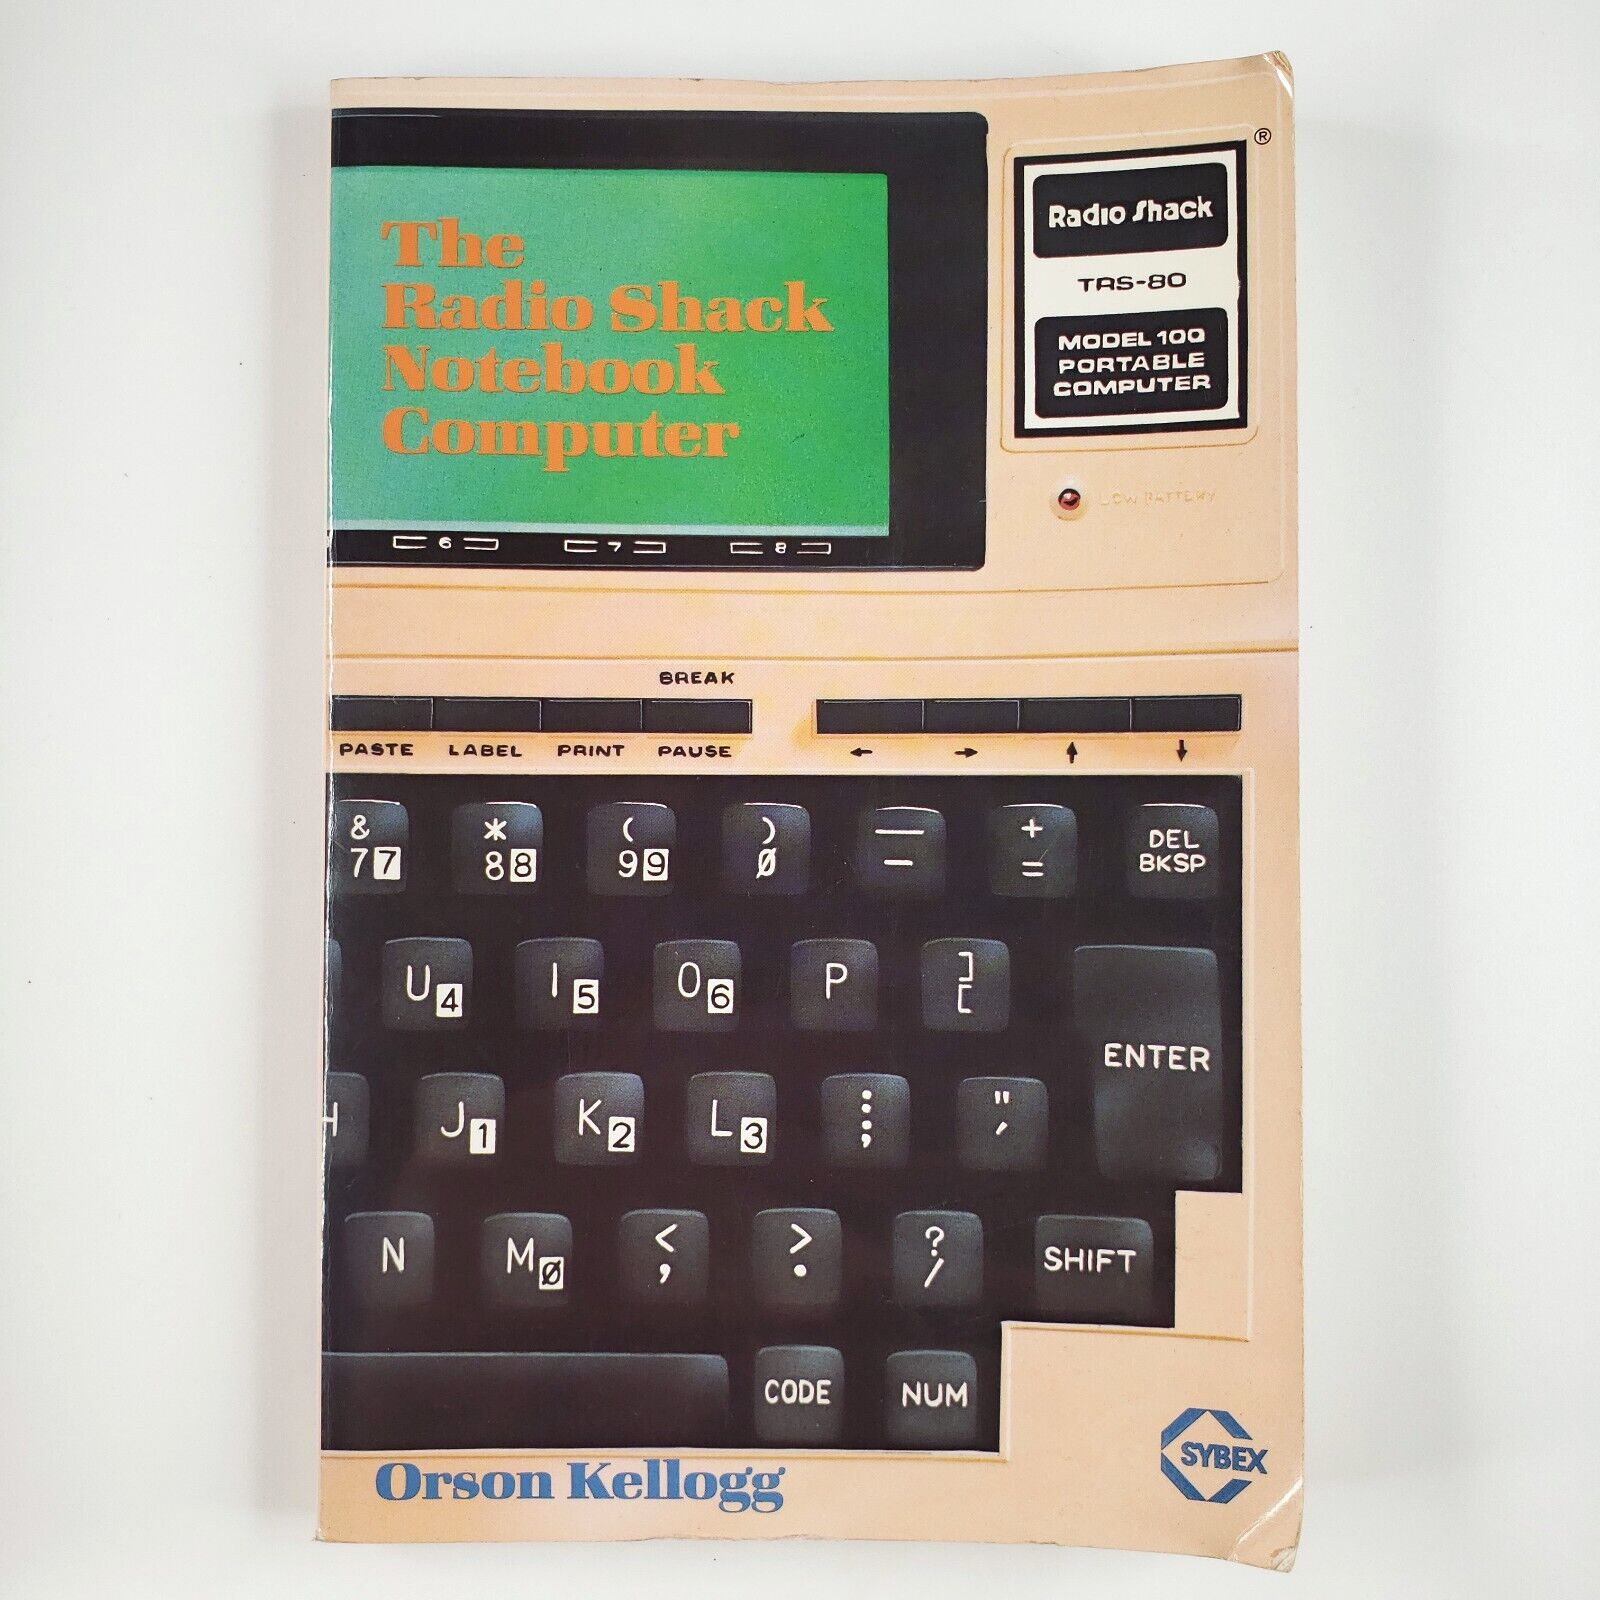 Radio Shack Notebook Computer Book 1984 Orson Kellogg TRS-80 Model 100 B577